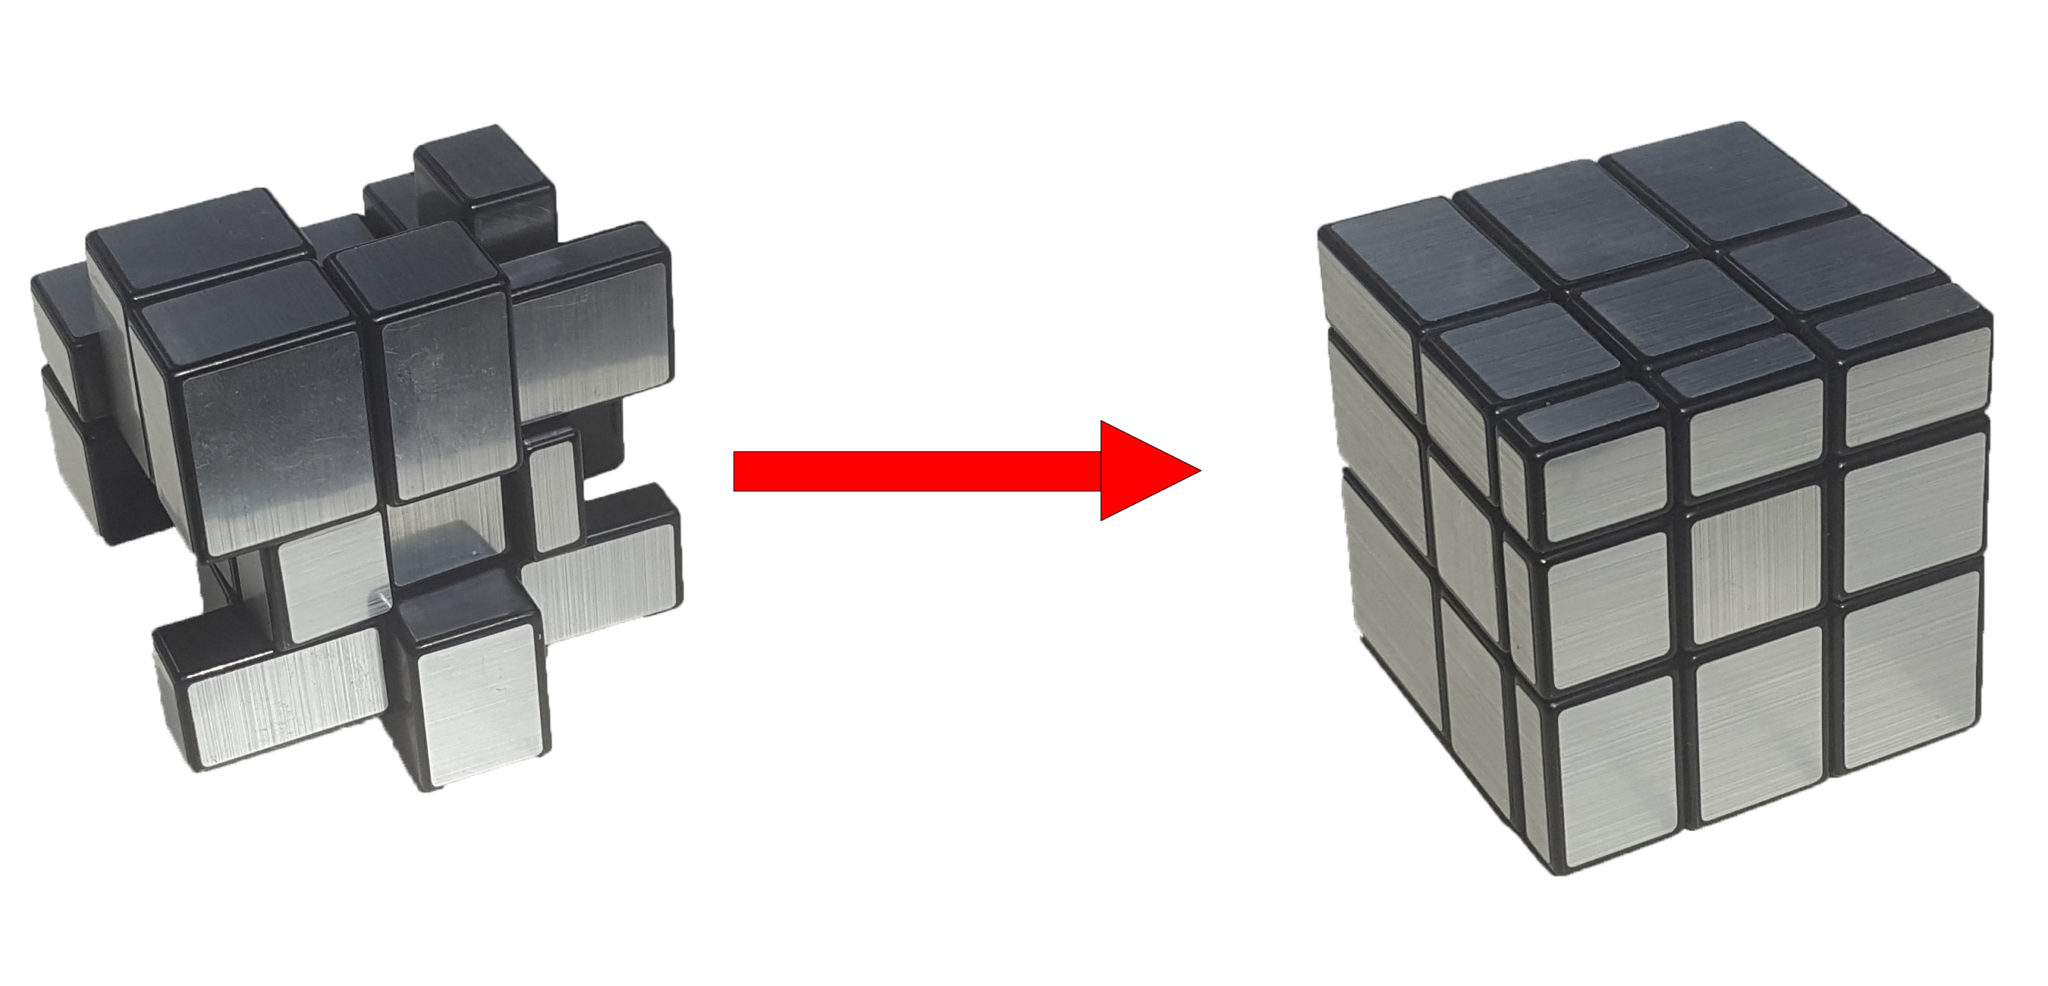 Zauberwürfel Magic Cube 3x3 neu in Beutel 